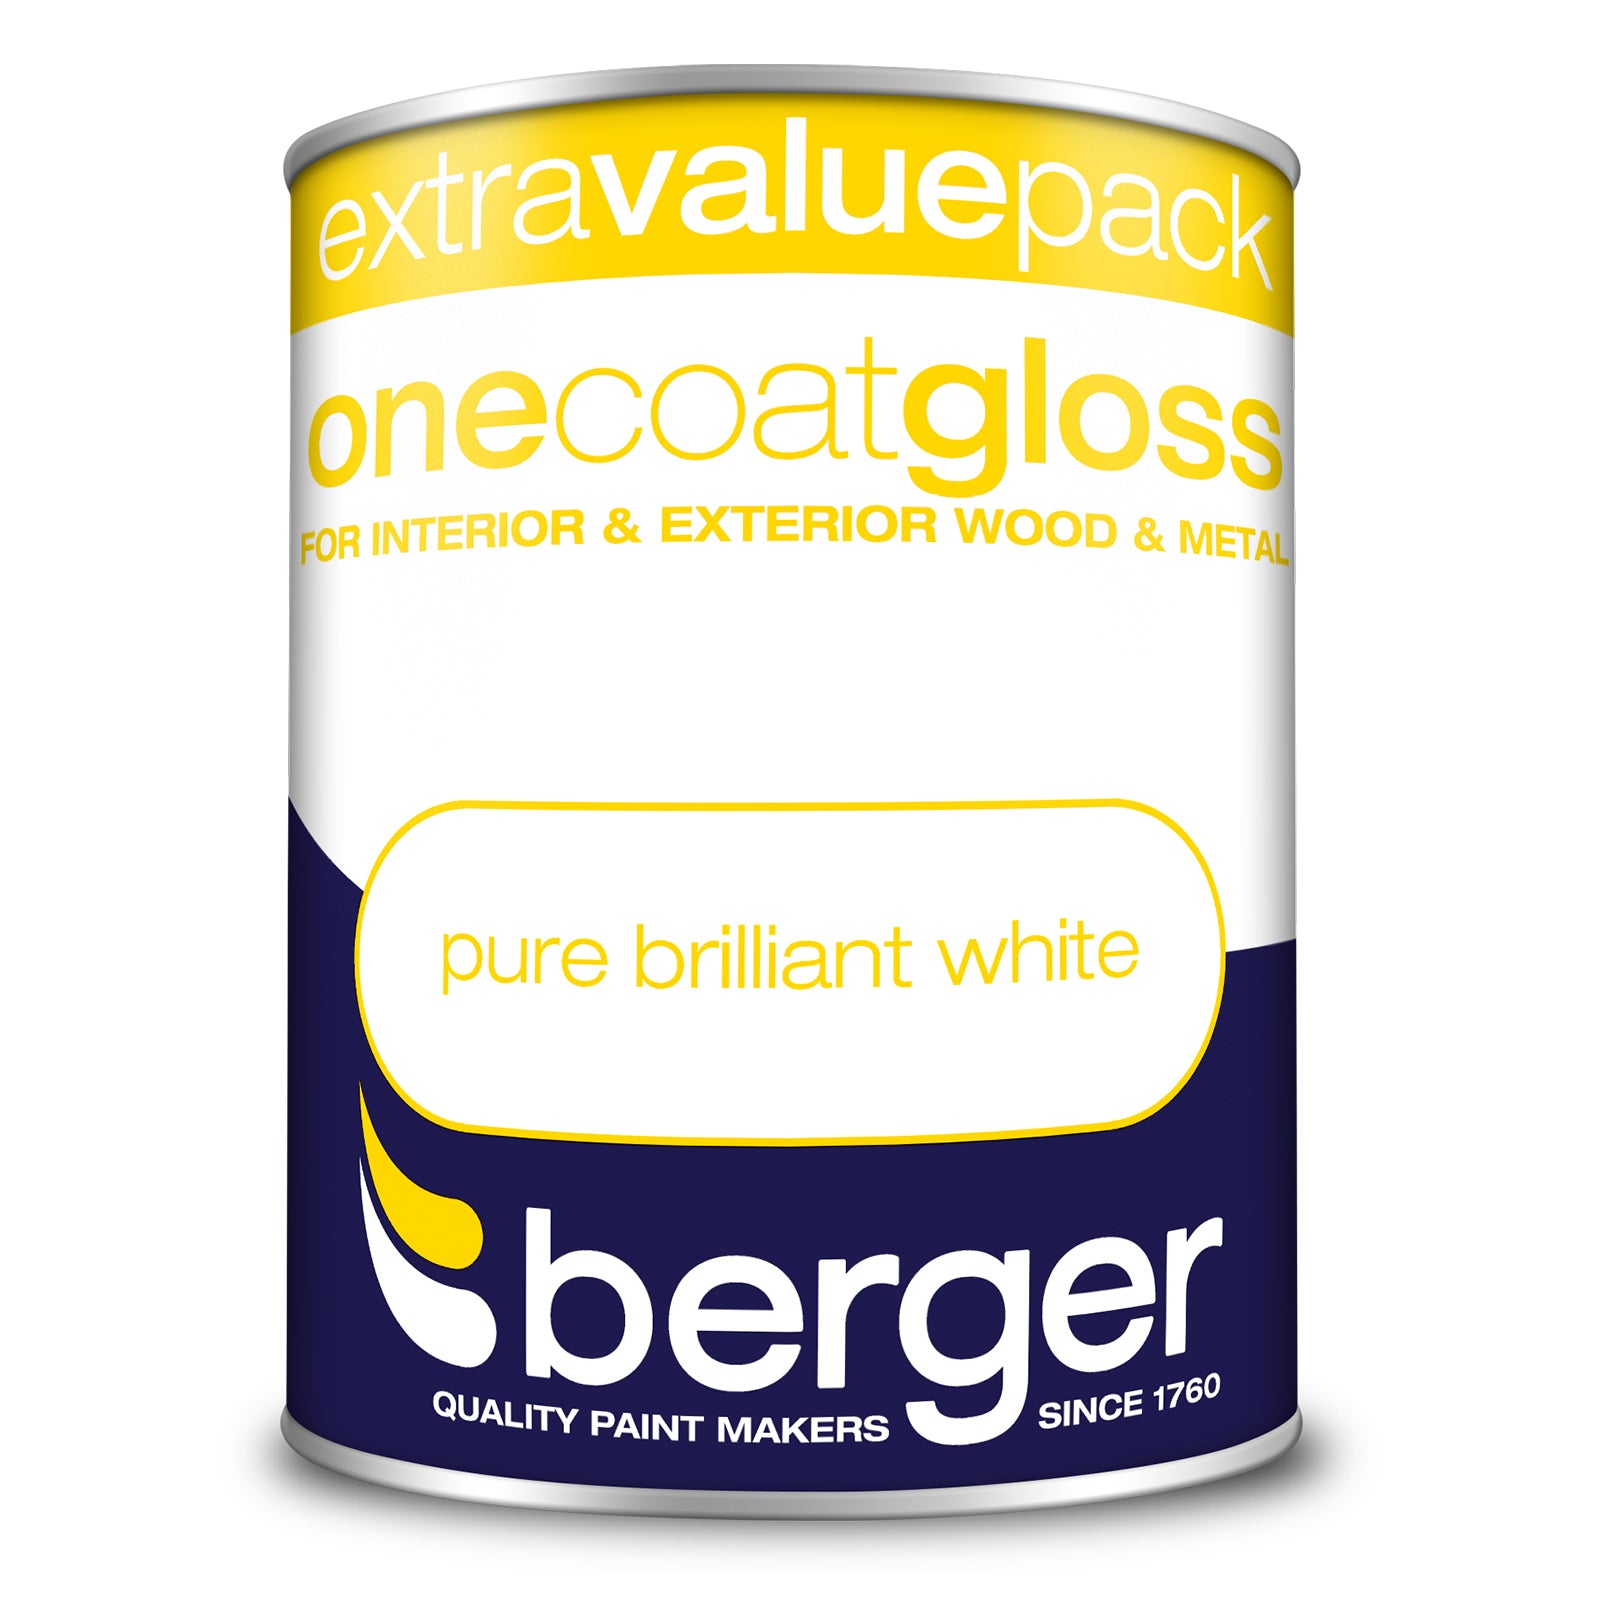 Berger One Coat Gloss Pure Brilliant White 1.25L